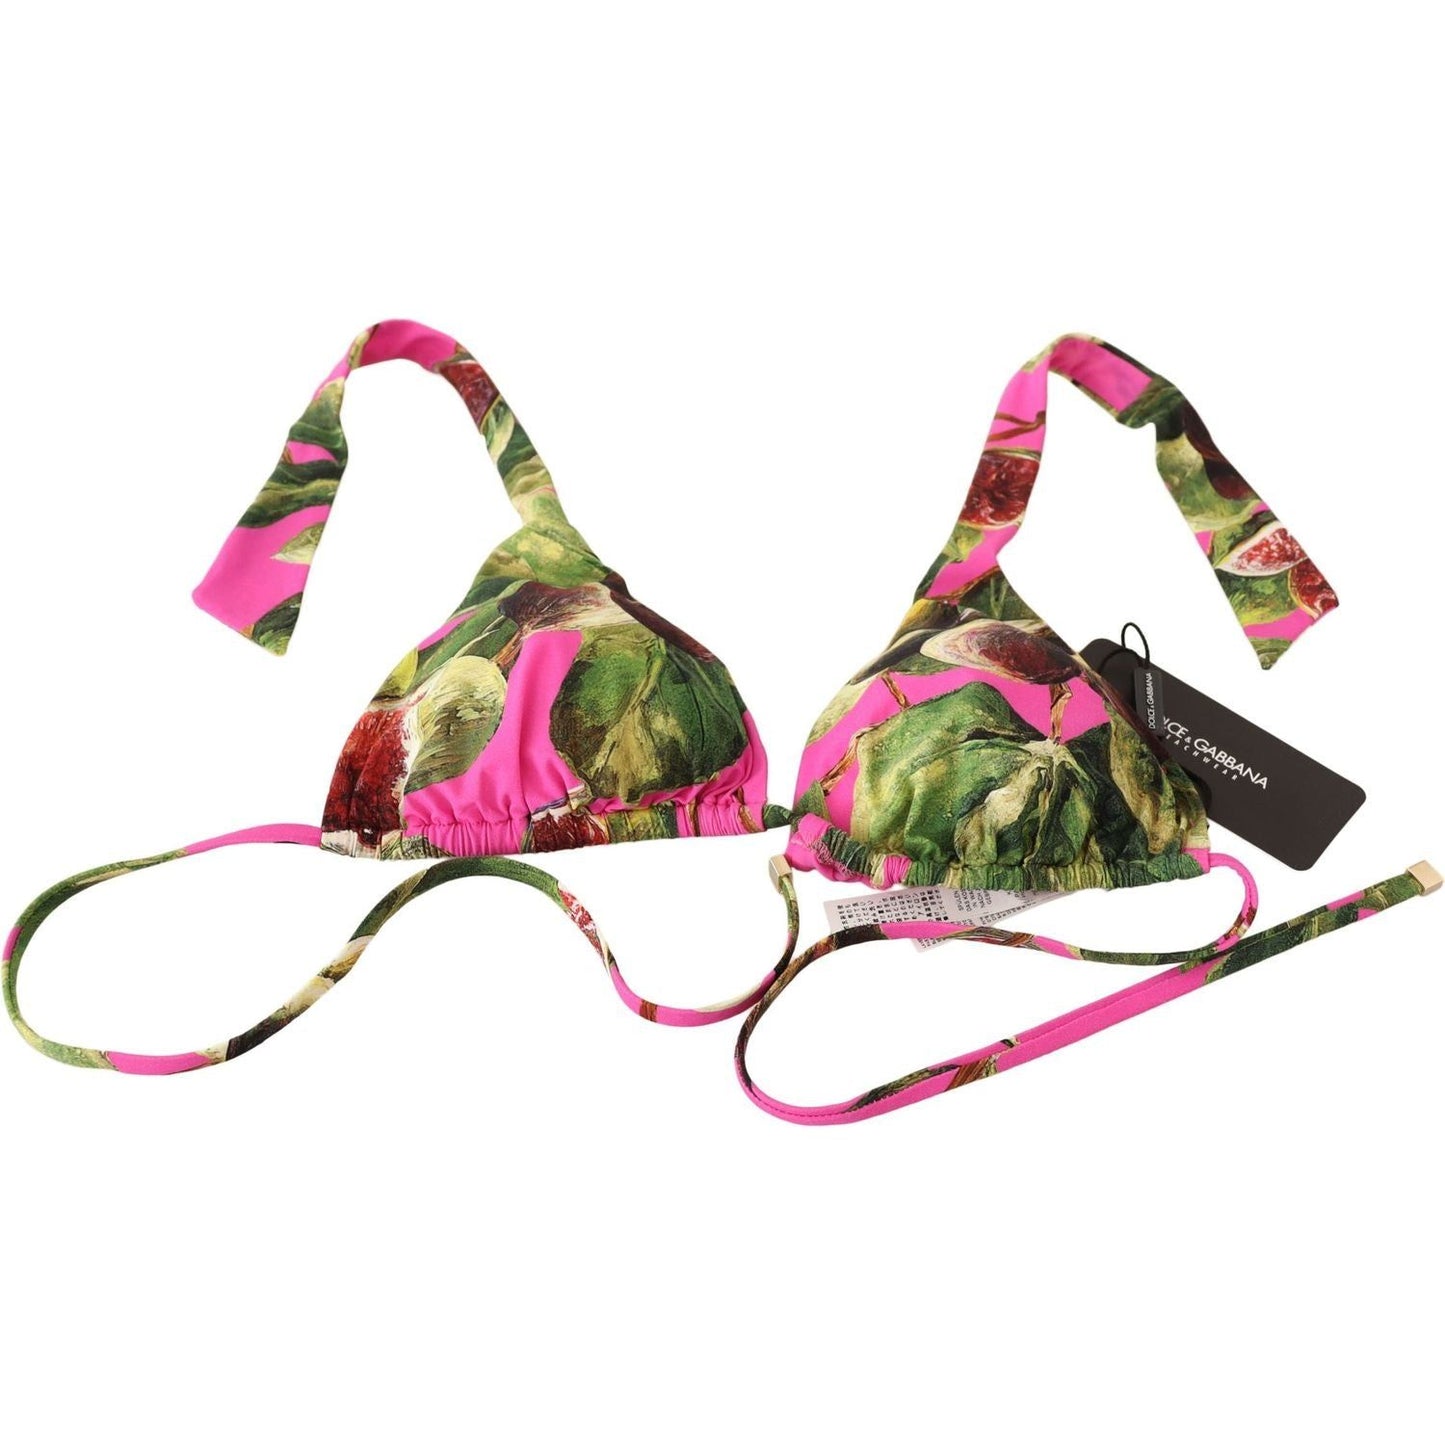 Dolce & Gabbana Chic Floral Bikini Top pink-printed-nylon-swimsuit-bikini-top-swimwear IMG_8267-scaled-29c39295-374.jpg